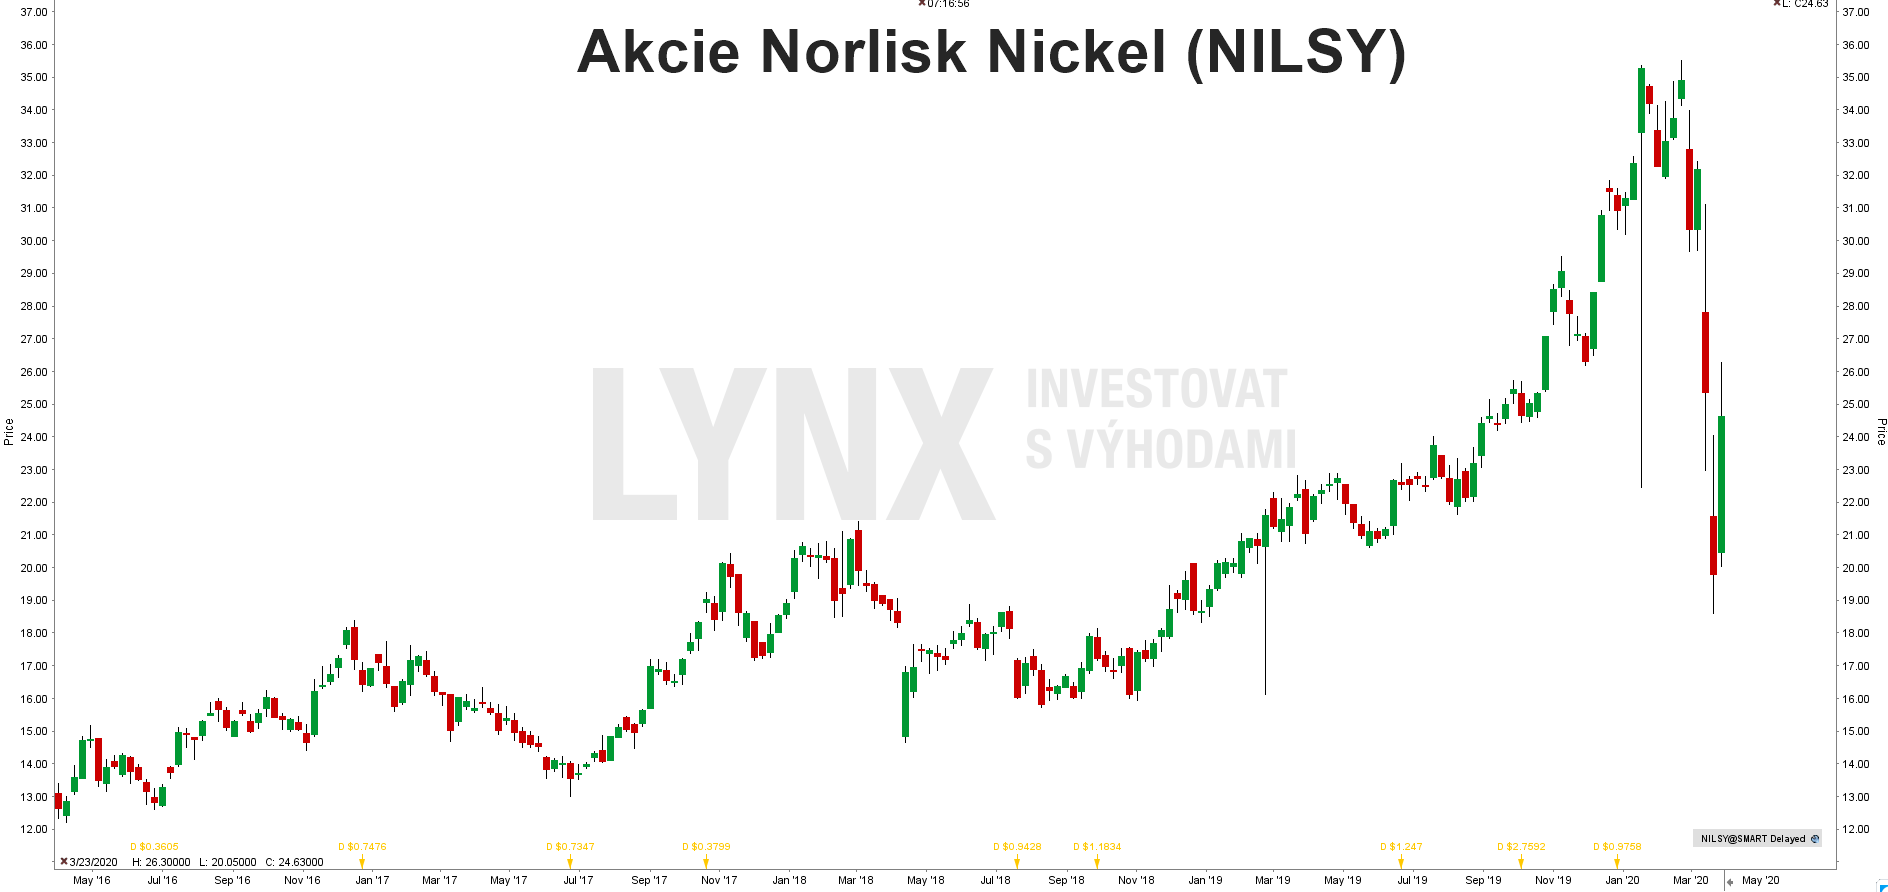 Graf akcie Norlisk Nickel (NILSY)